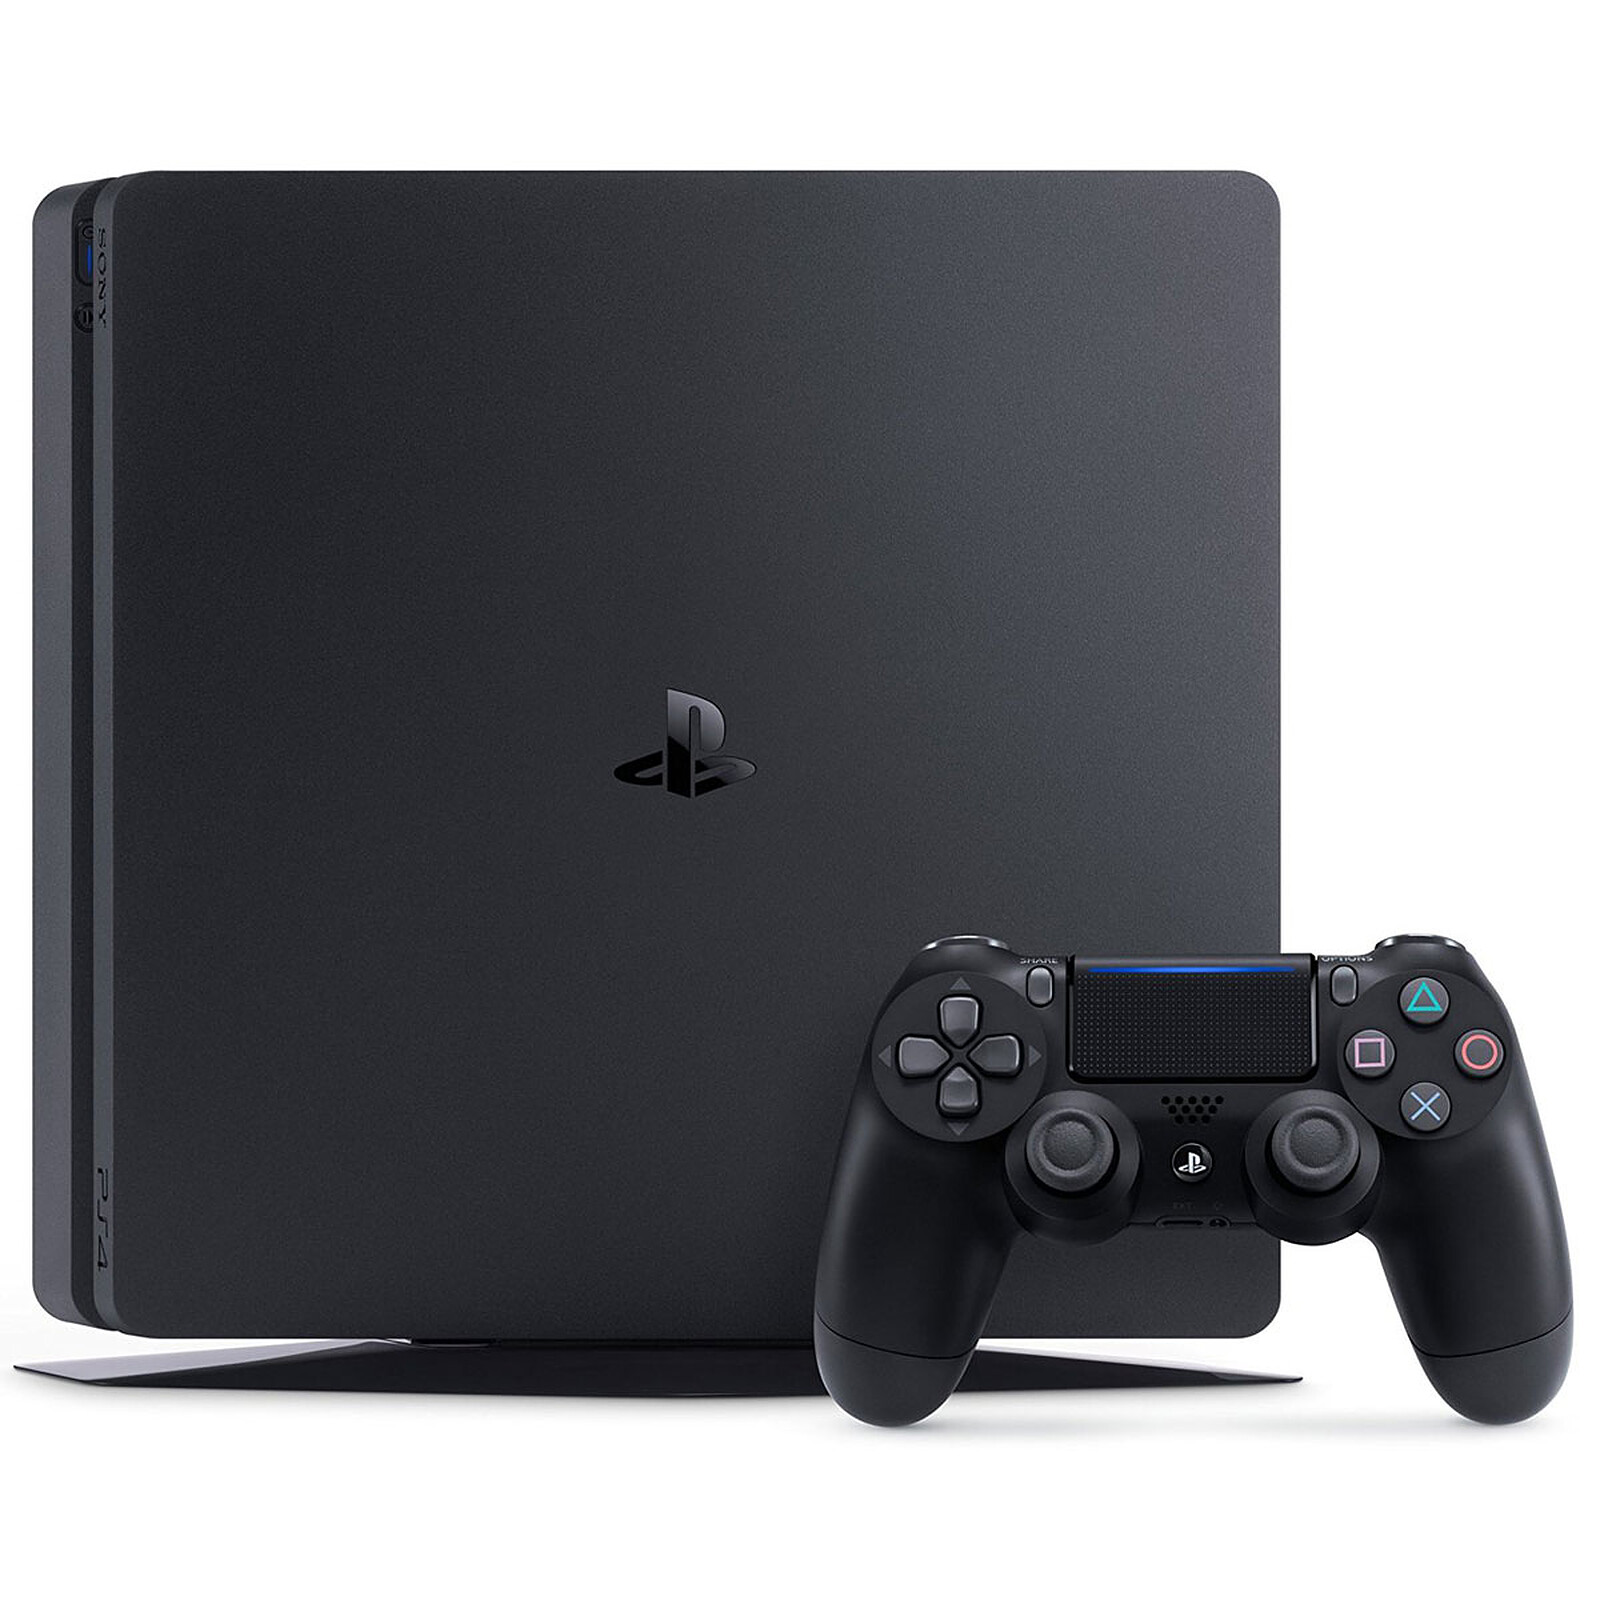 Sony PlayStation 4 Slim (500GB) - Jet Black